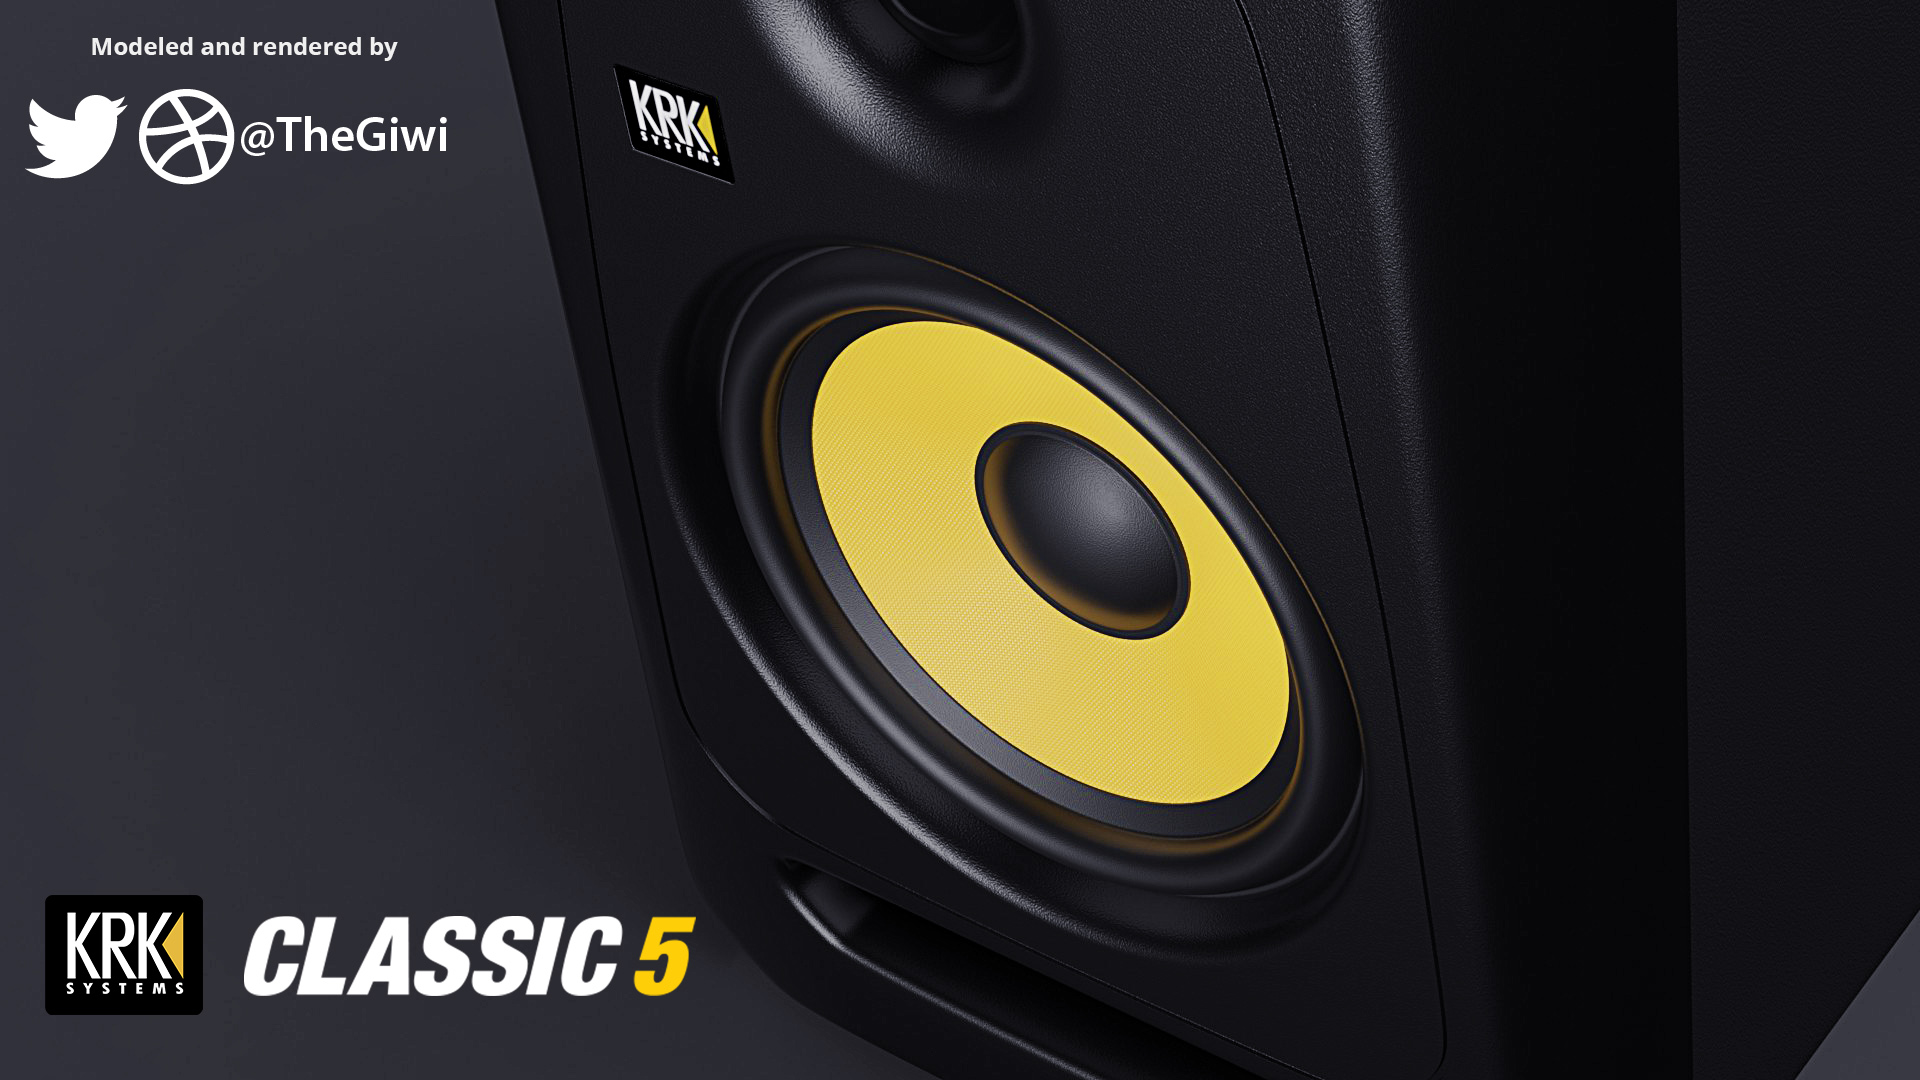 KRK Classic 5 Studio Monitor Speakers preview image 4